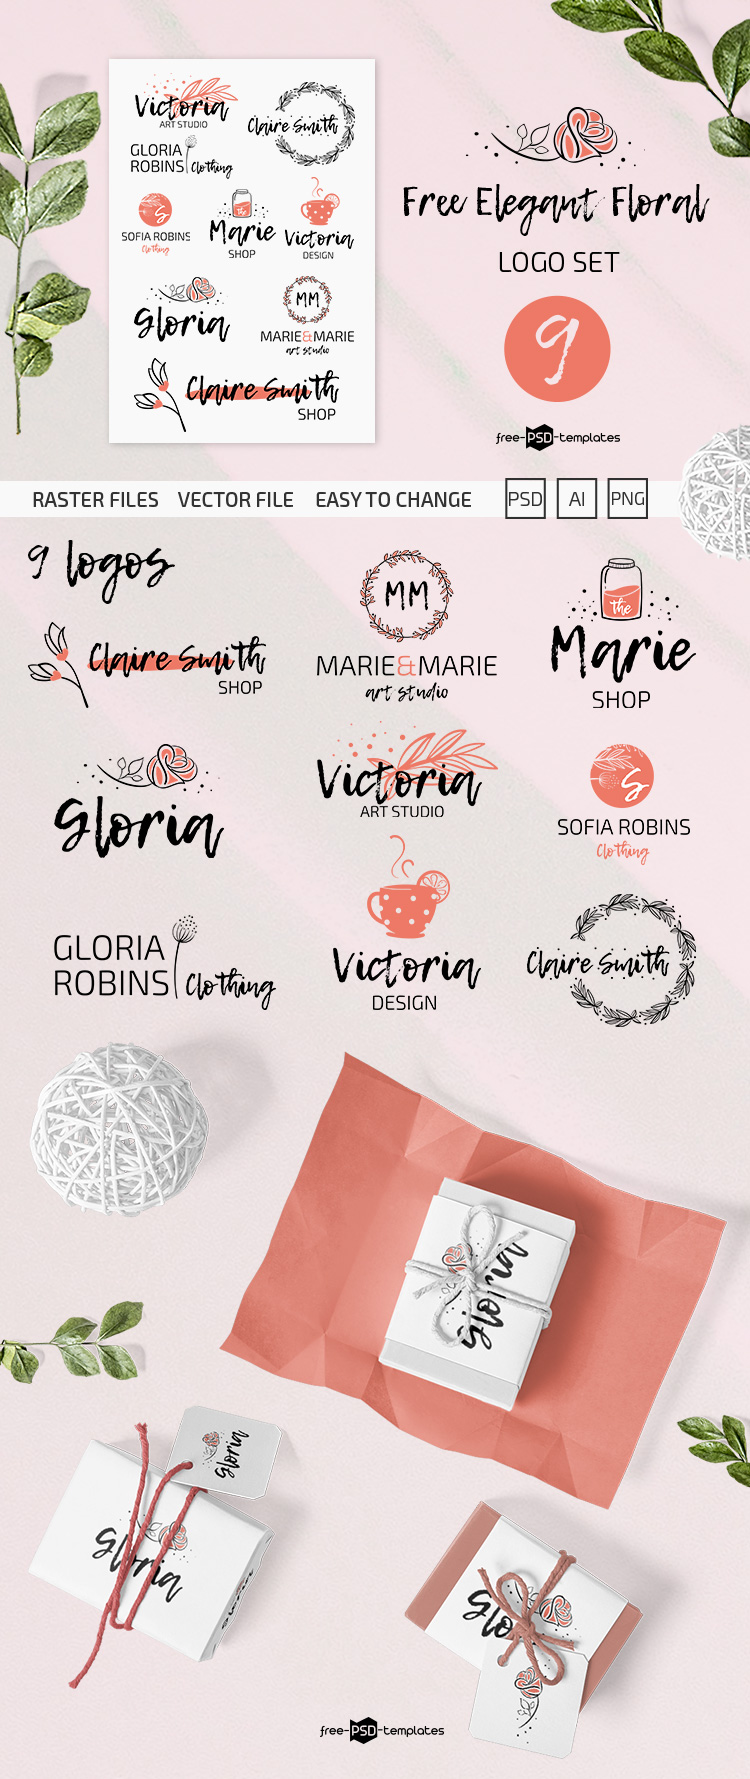 Download Free Elegant Floral Logo Set | Free PSD Templates